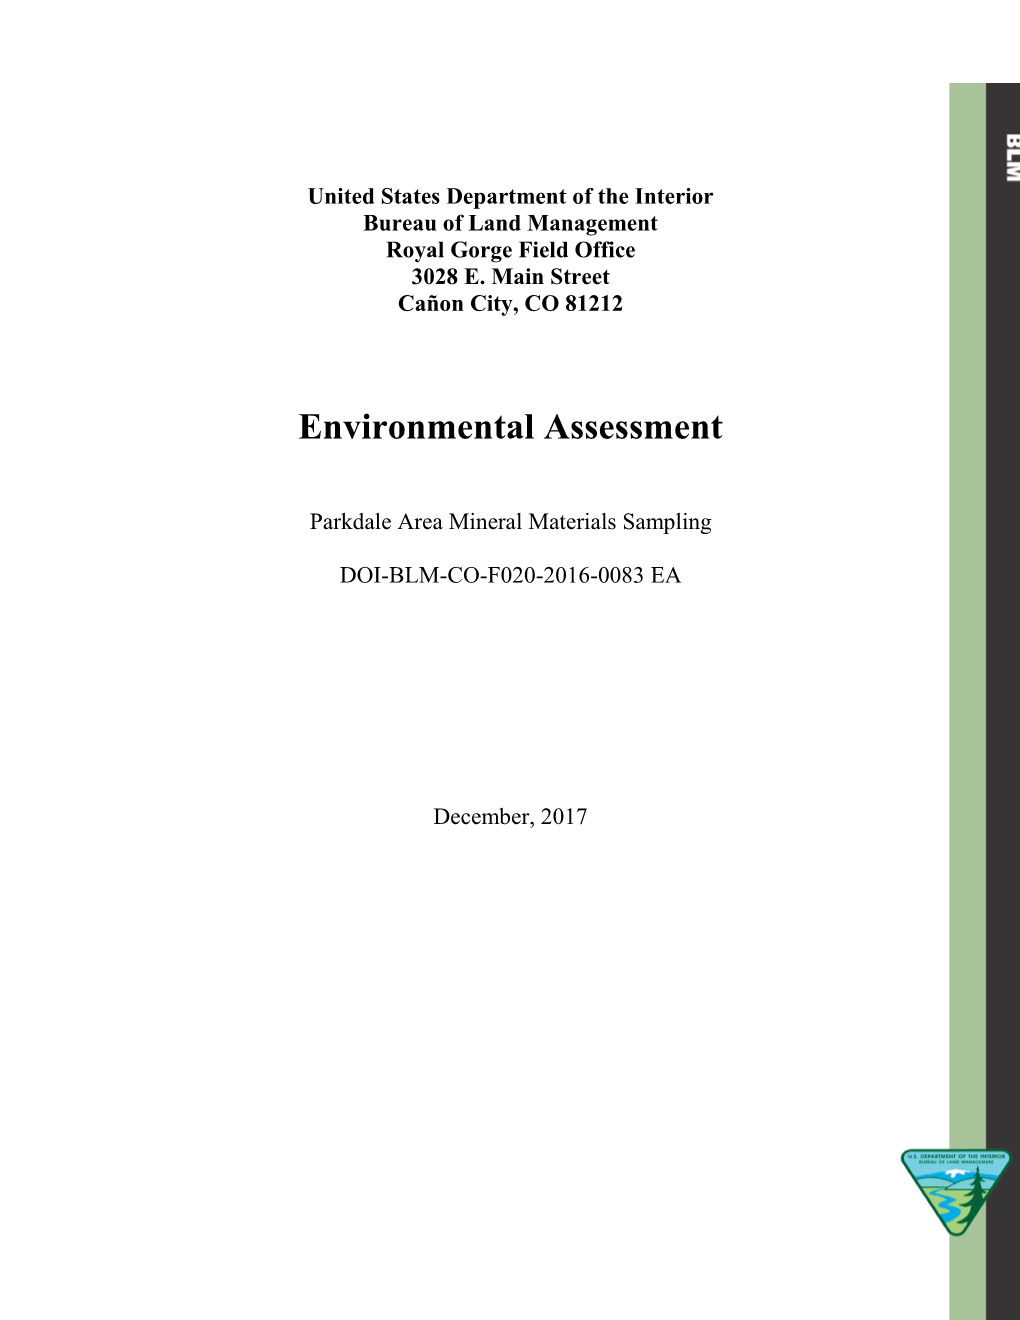 Environmental Assessment Record